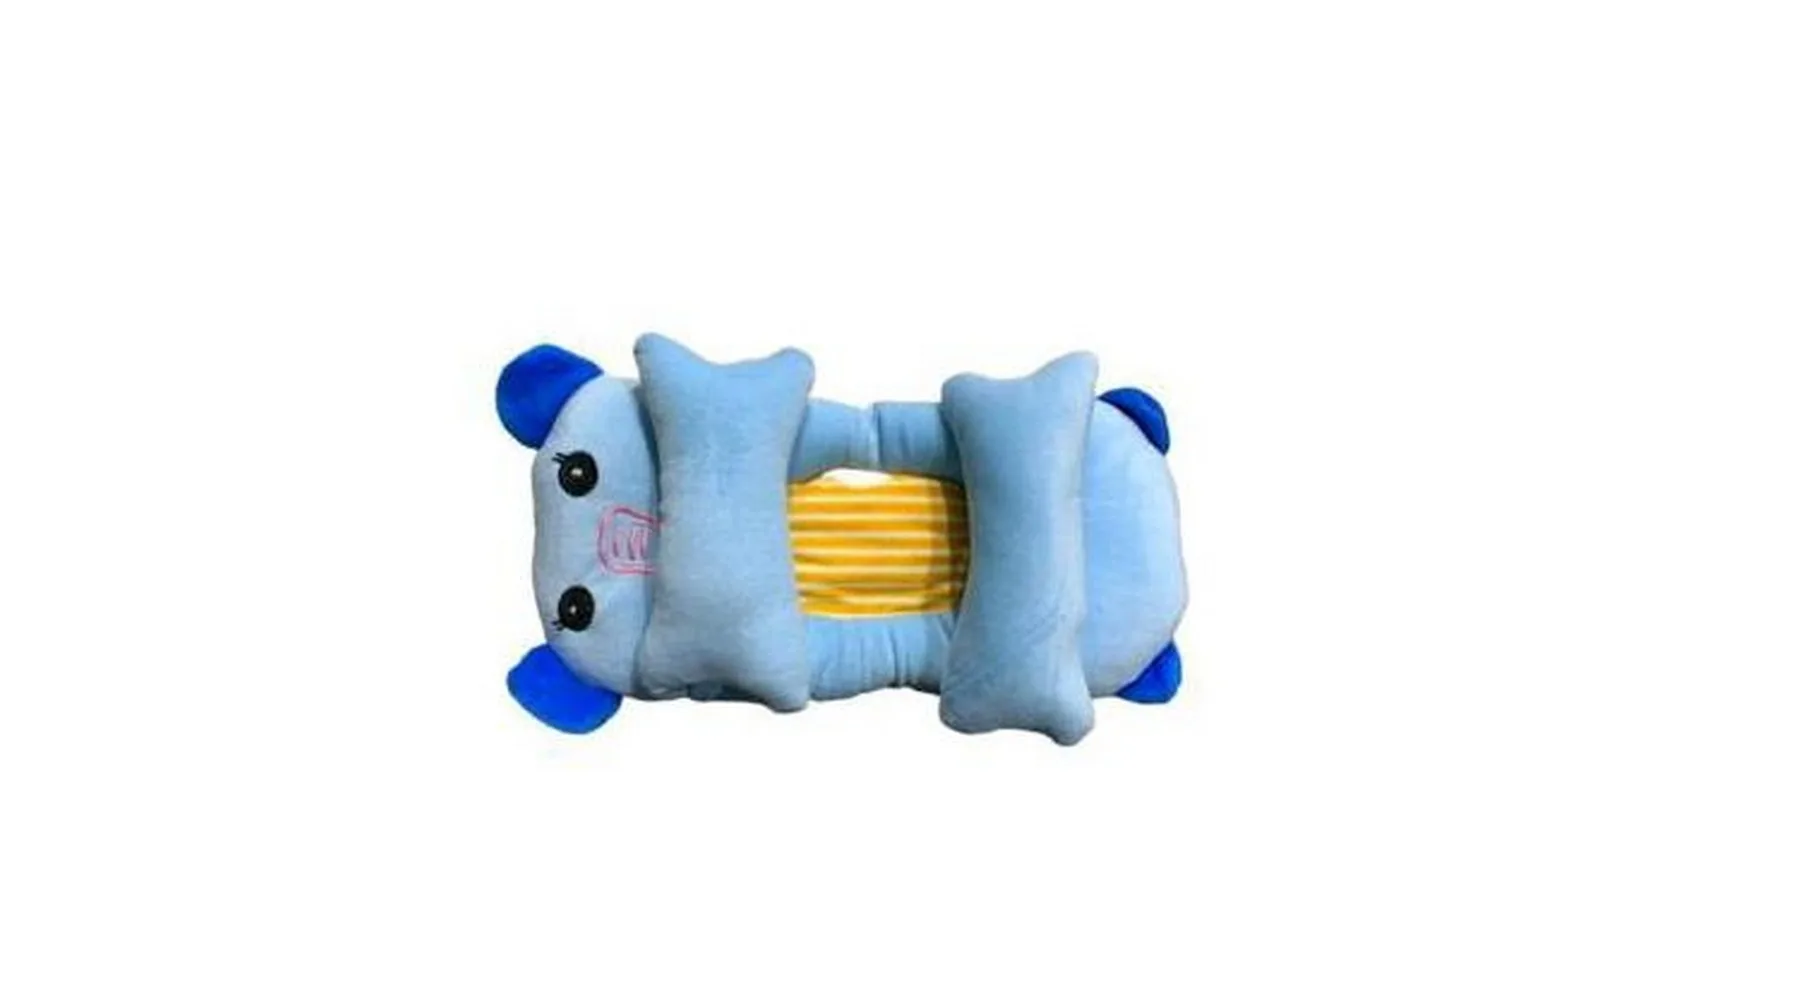 Baby neck pillow elephant body, blue